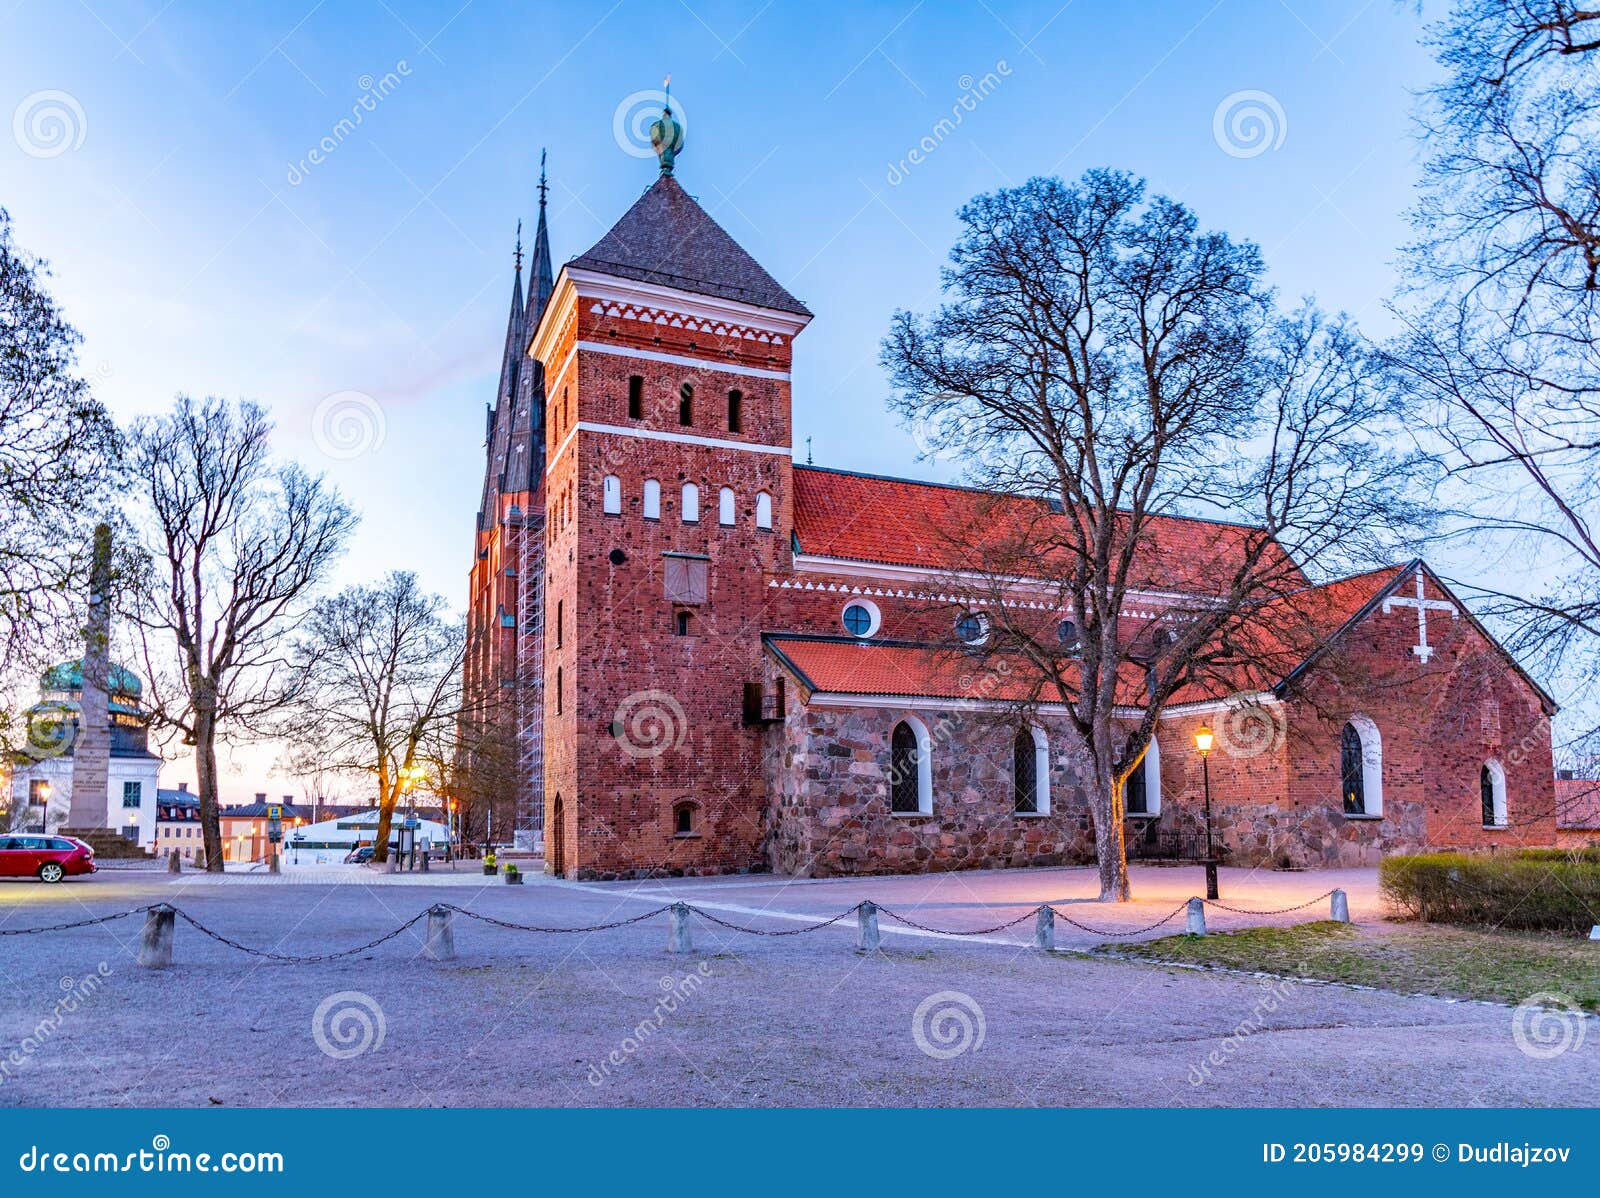 susnset view of helga trefaldighets kyrka and cathedral in uppsala, sweden